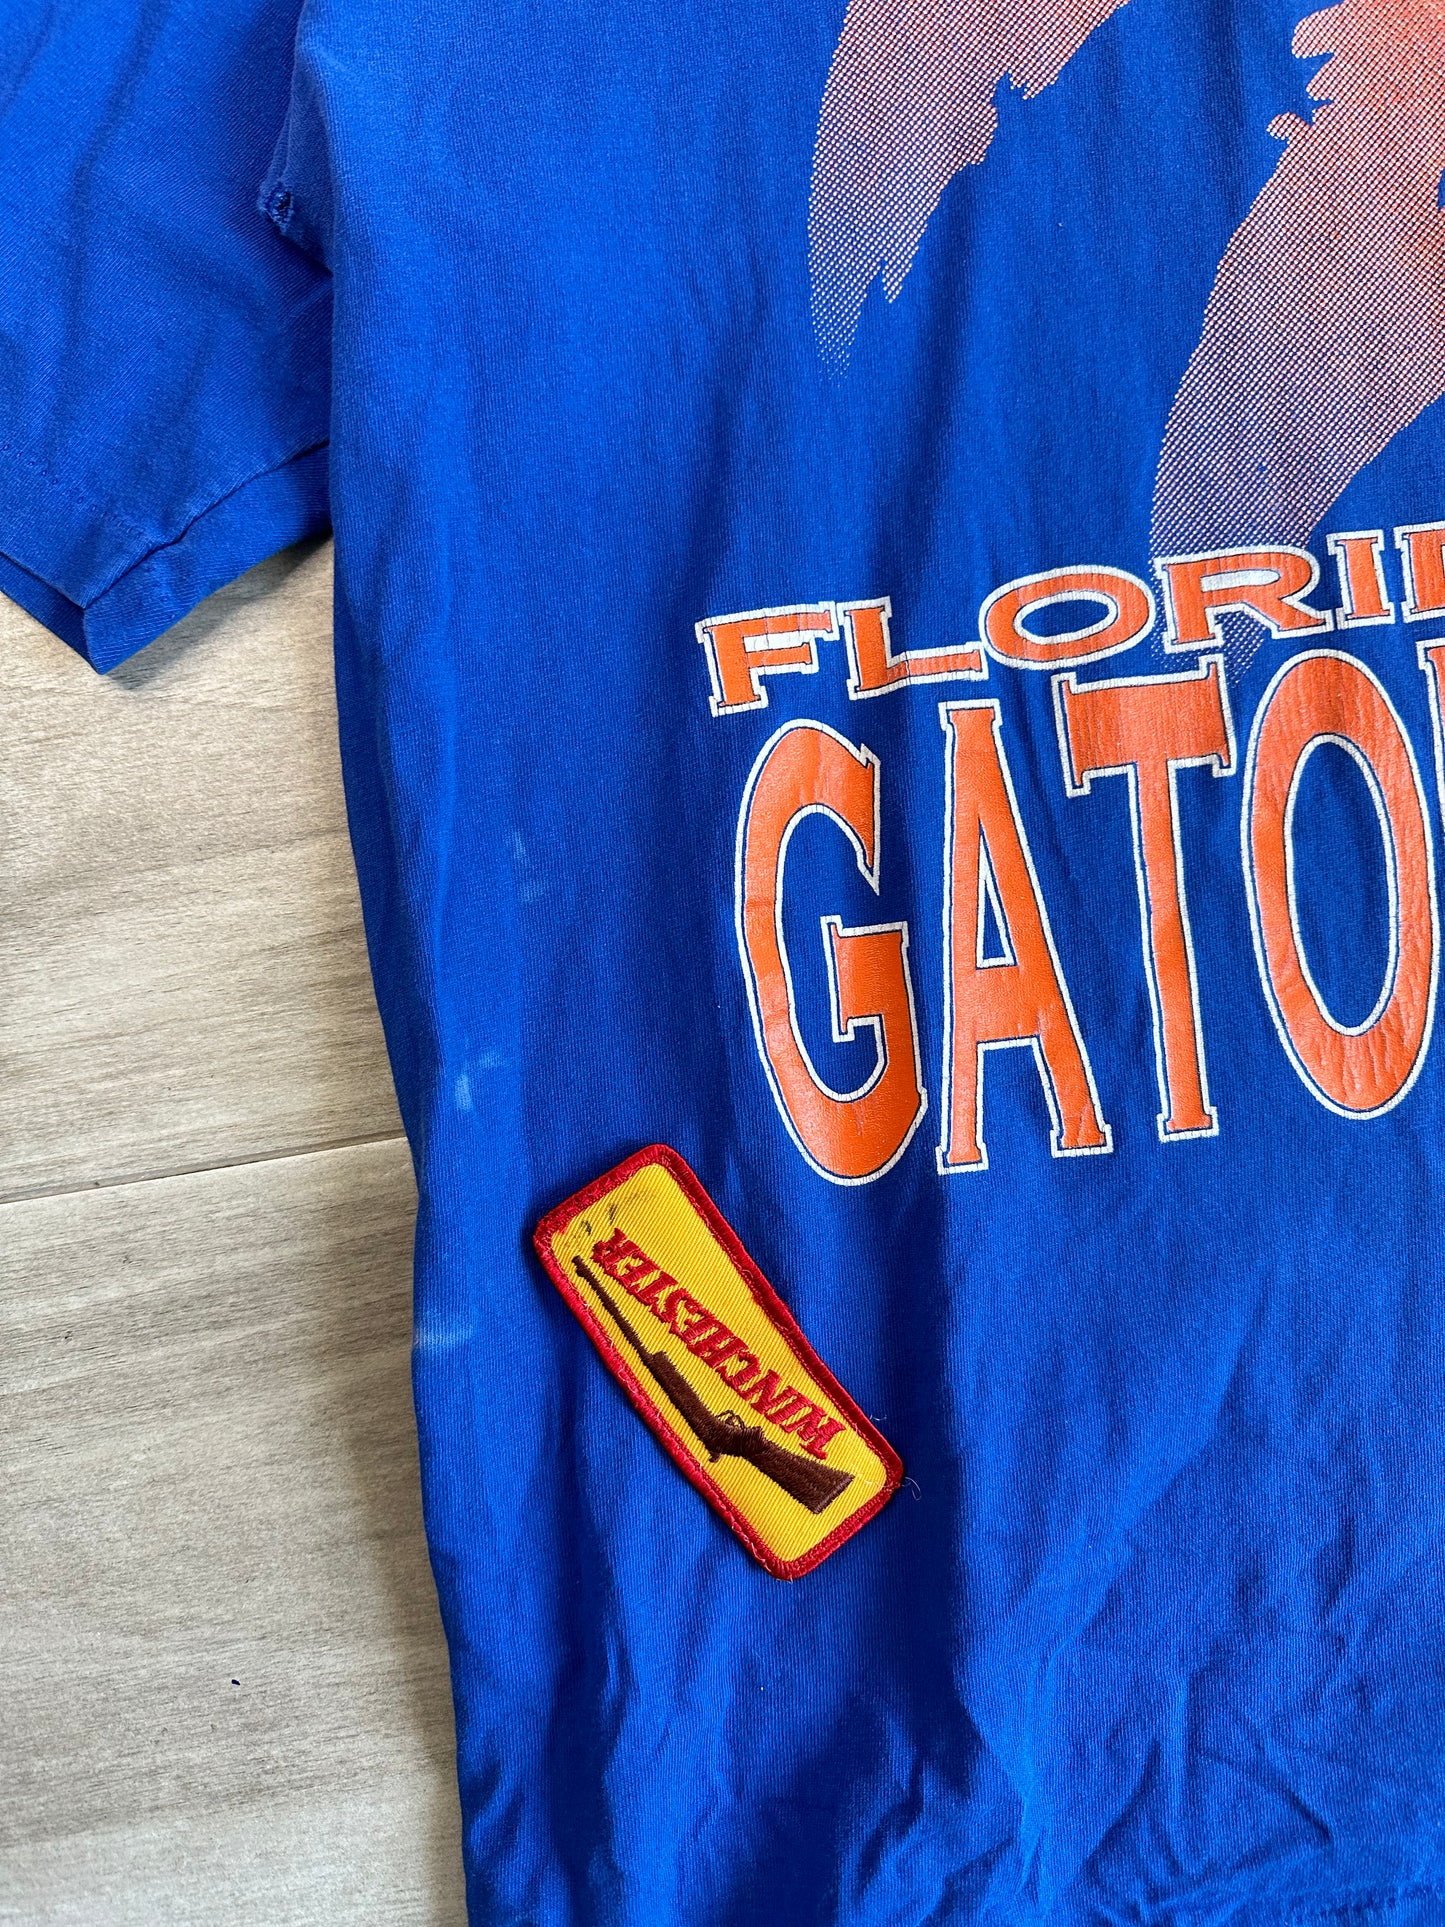 Florida Gators Tee- XXL